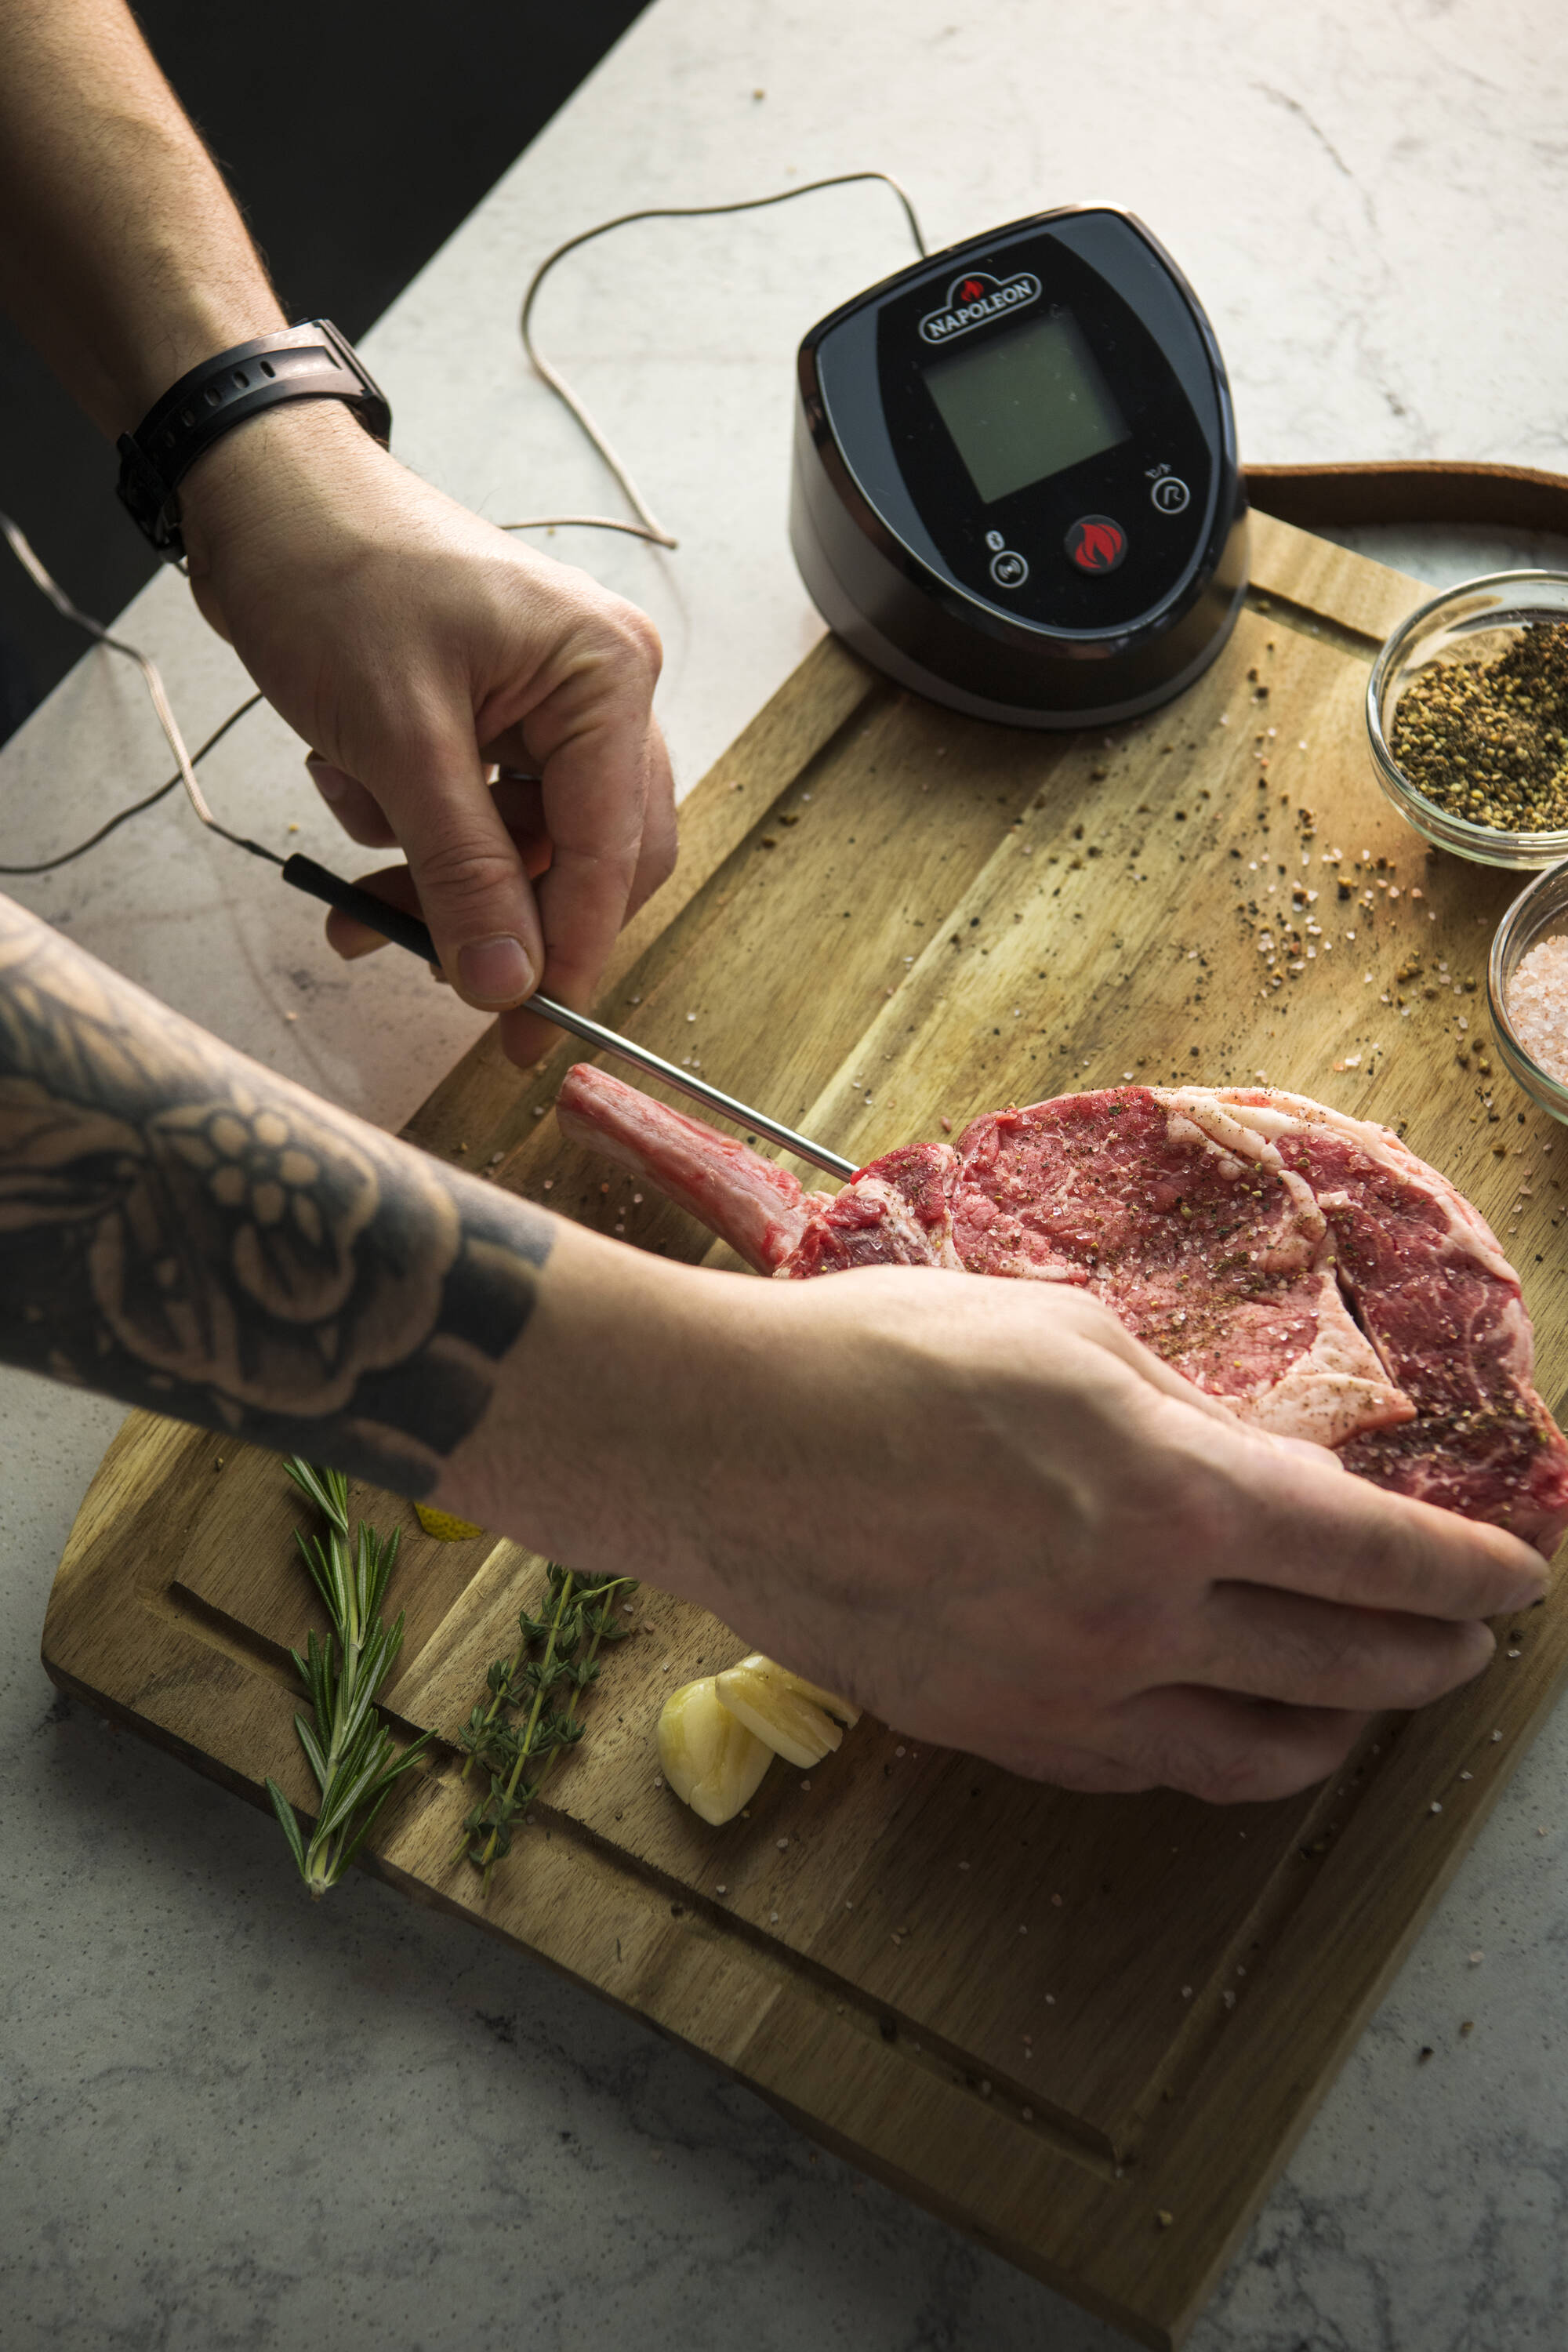 Mister Meat Steak Tenderizer Machine Flattener Kitchen Tool